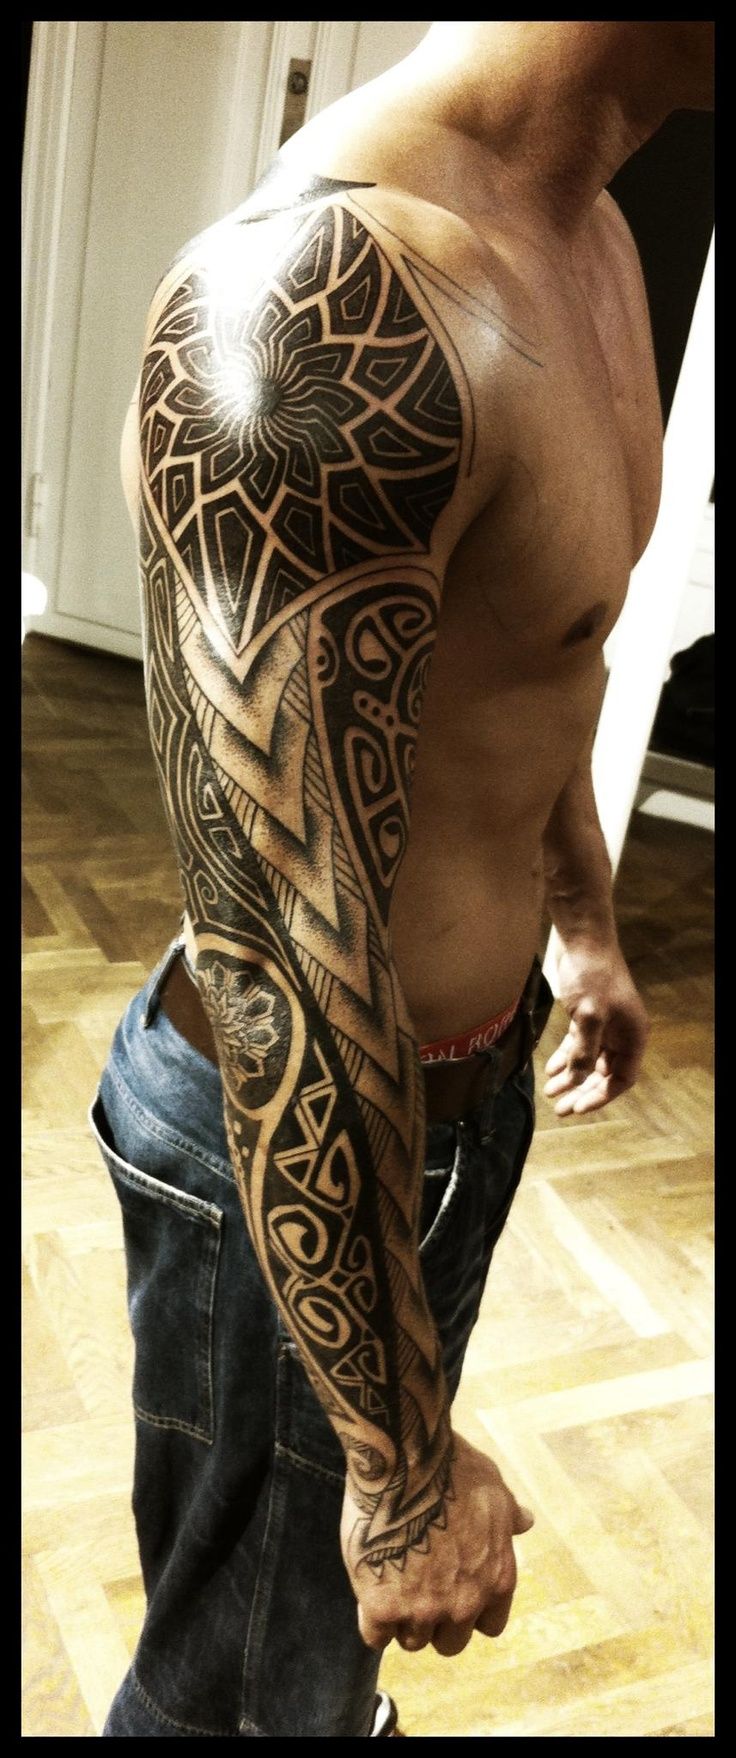 Upper Arm Tattoo Designs For Guys - Upper Arm Tattoos For Men Designs ...